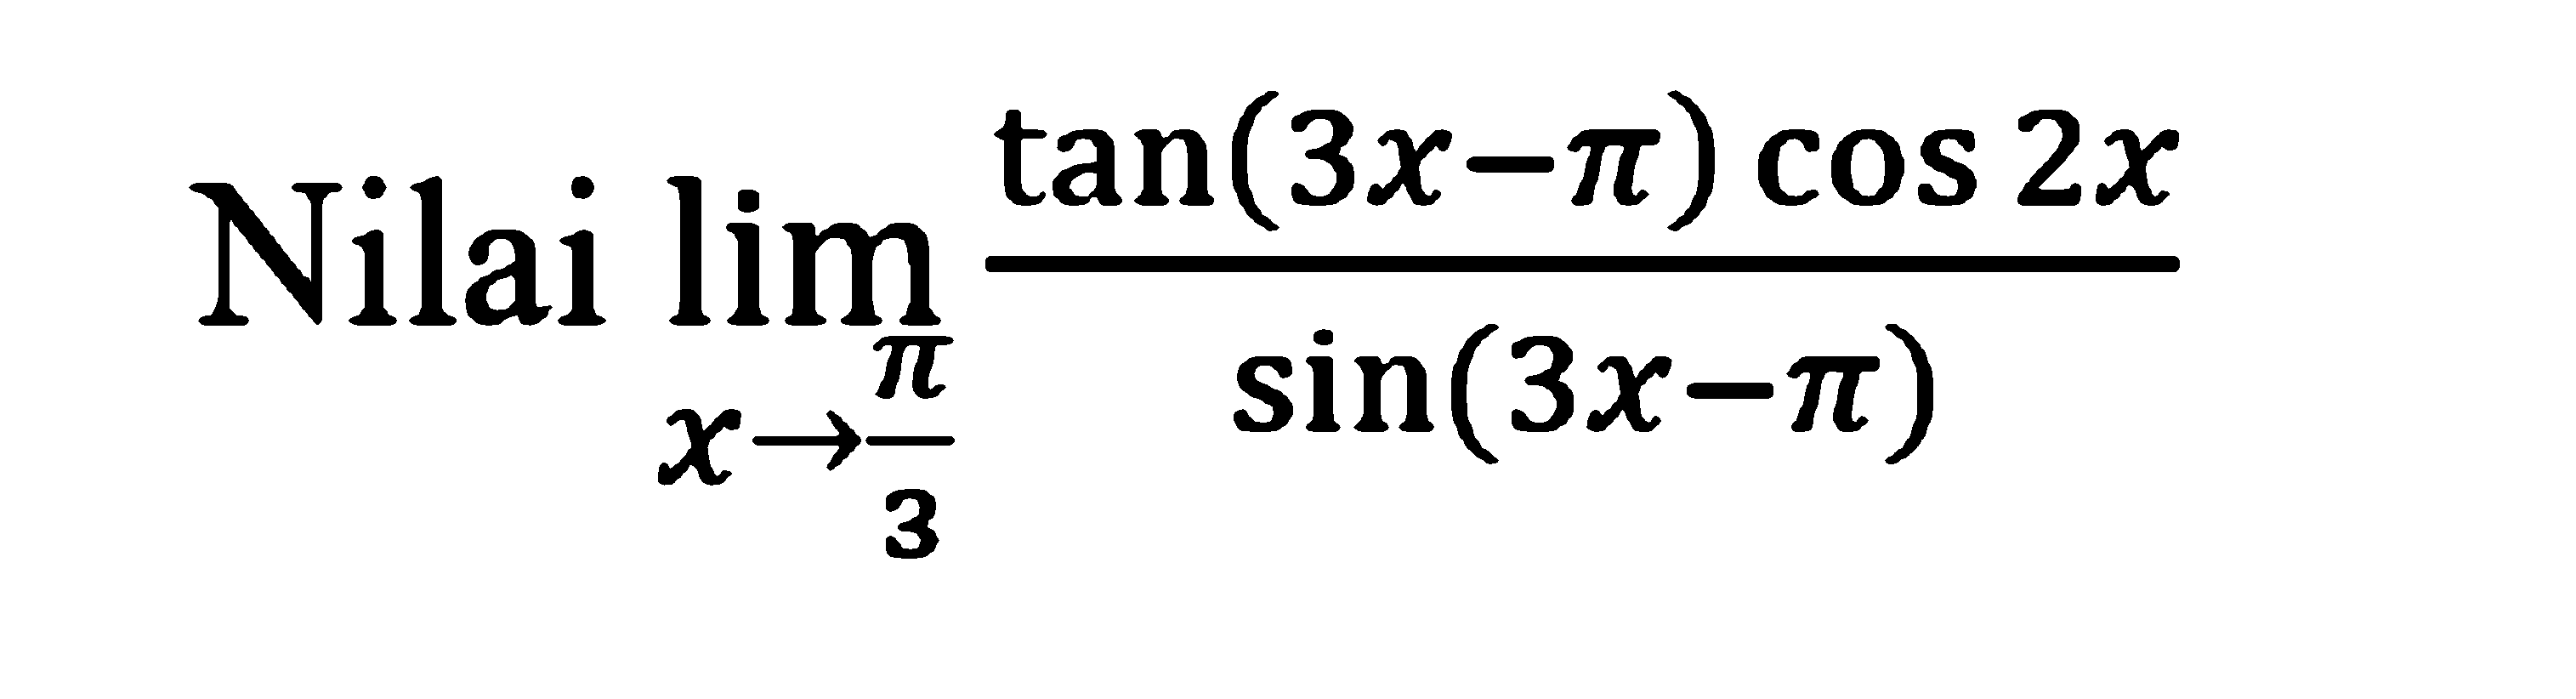 Nilai lim x->pi/3 (tan(3x-pi)cos 2x)/sin(3x-pi)